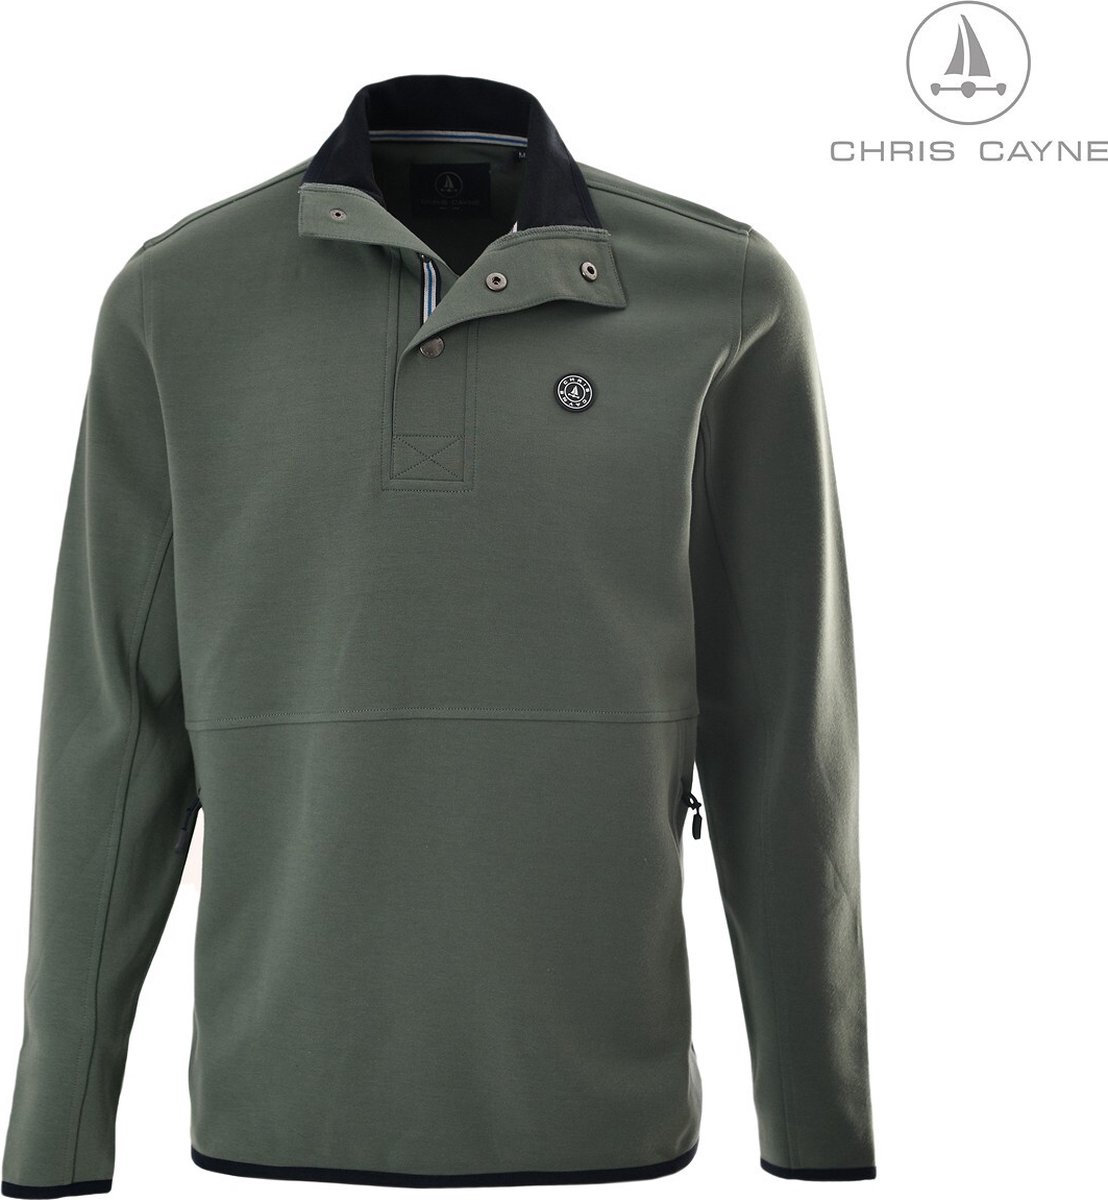 Chris Cayne heren trui - polosweater heren - 3489 - groen - navy accenten - maat XL